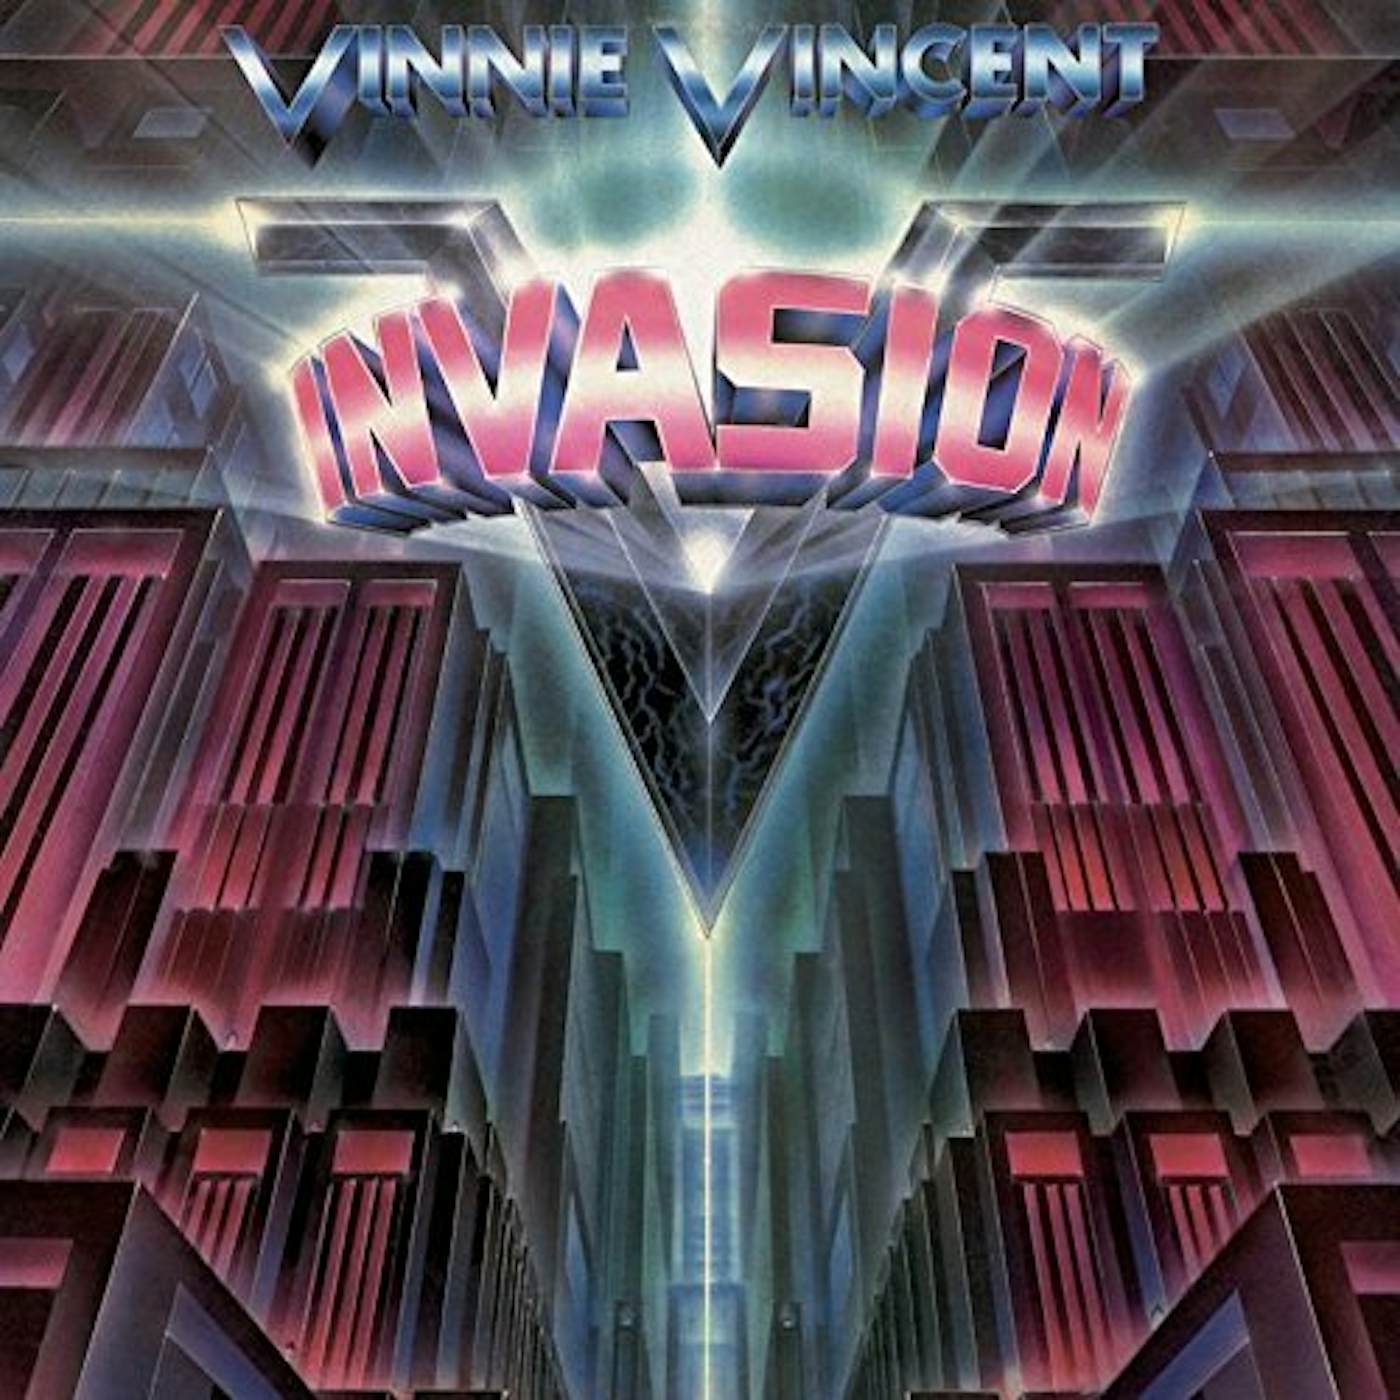 VINNIE VINCENT INVASION CD